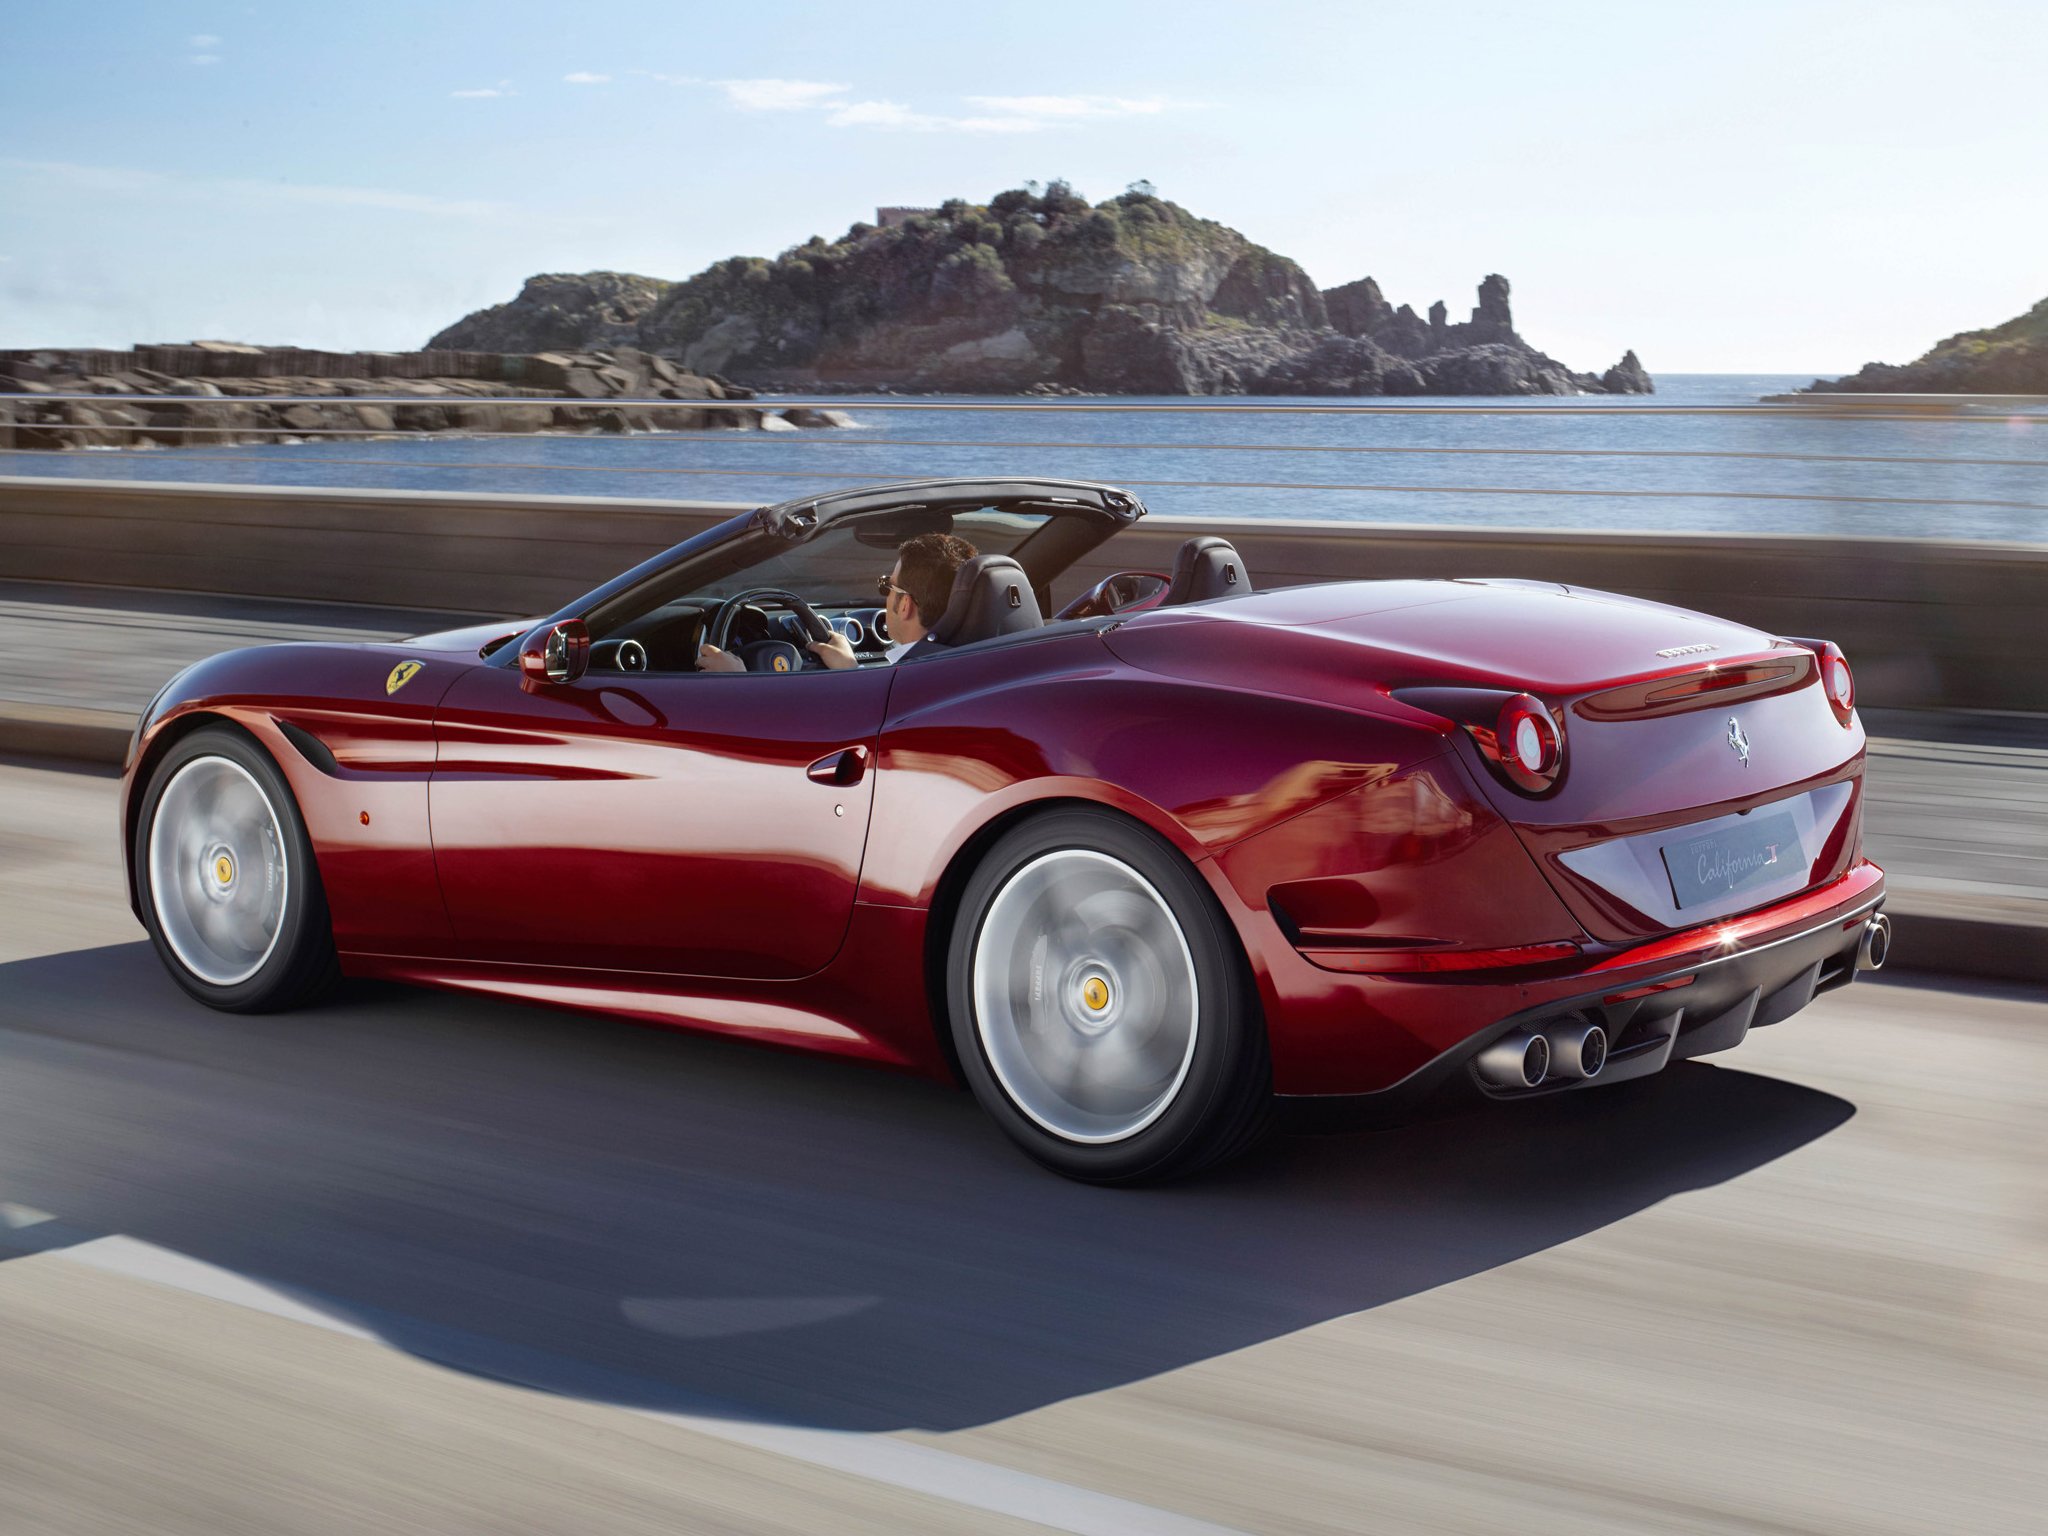 2014, Ferrari, California t, Supercar, California,  16 Wallpaper